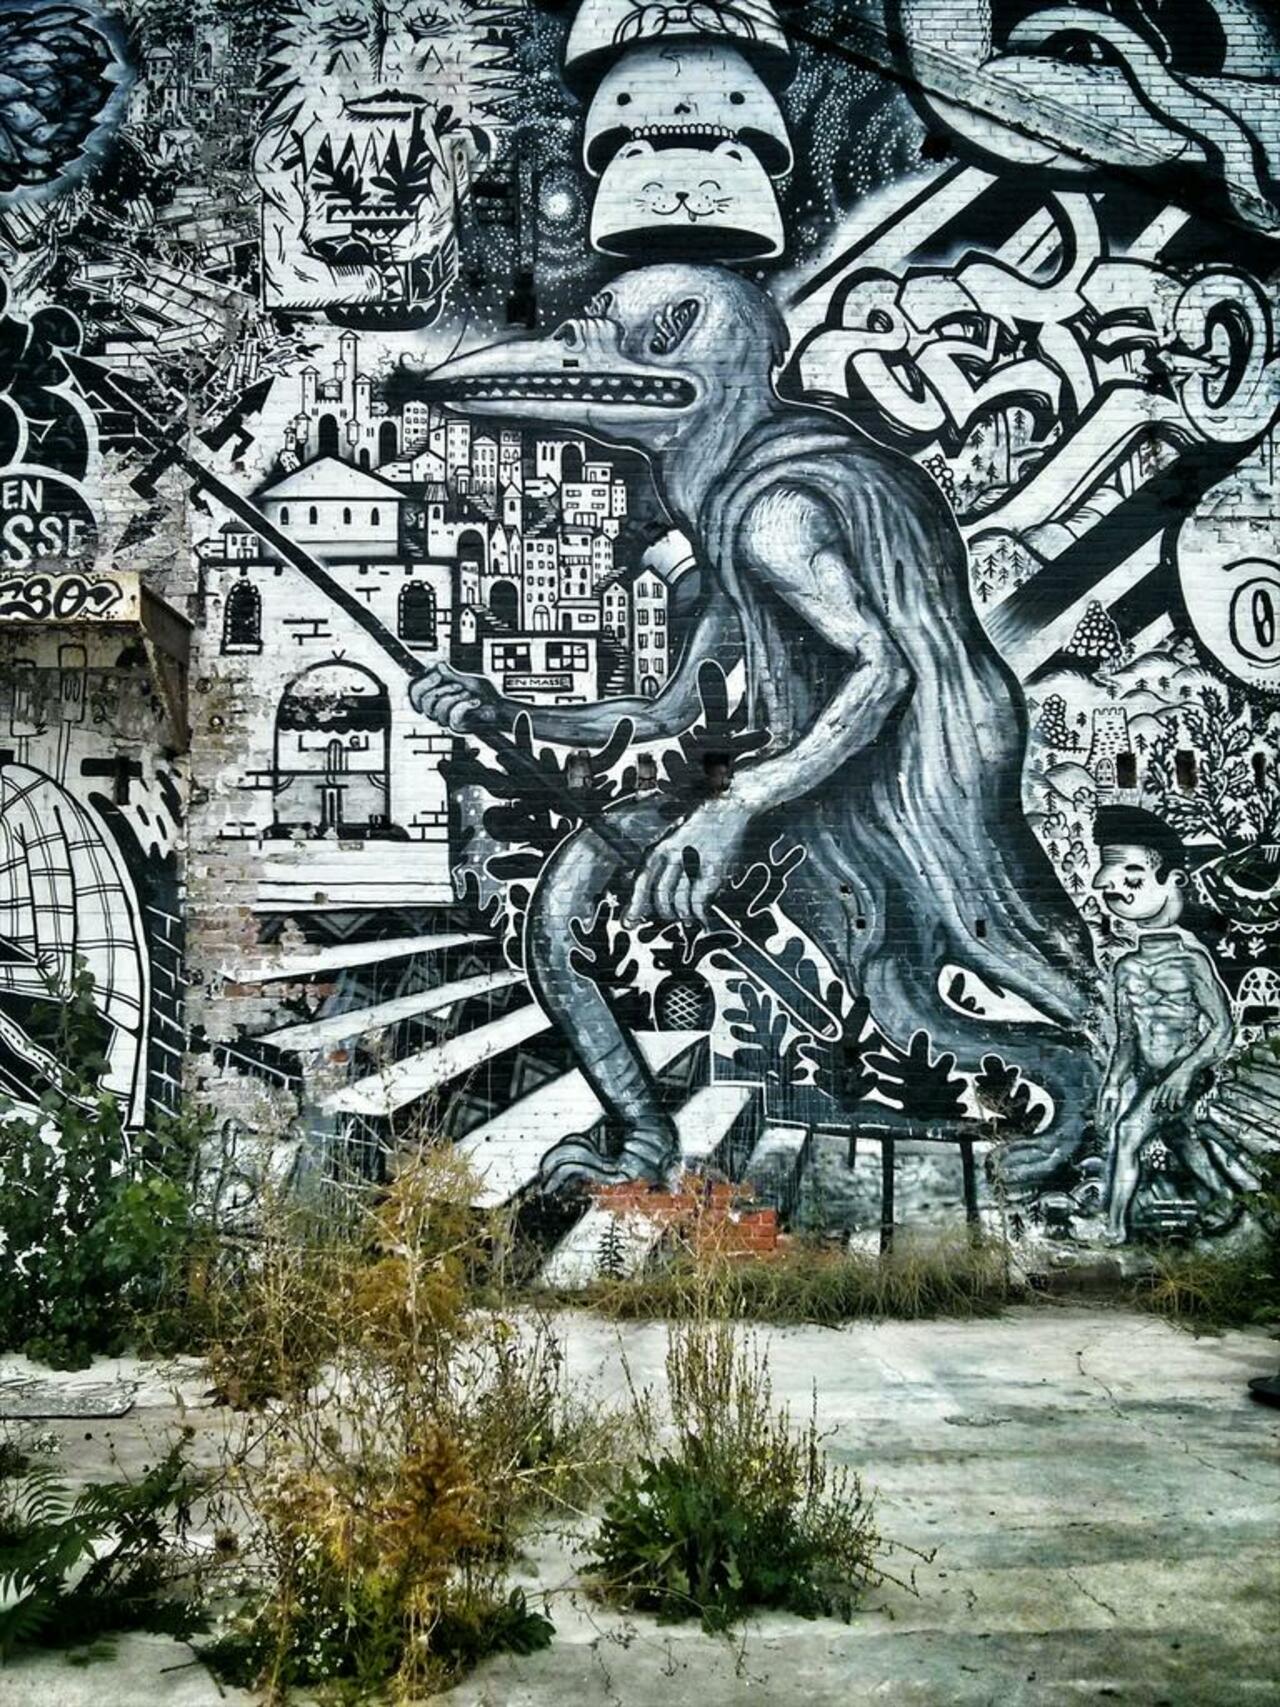 RT @Catjk68: Detail of an amazing work by the En Masse collective, Bathurst Street.
#streetart #graffiti #urbanart http://t.co/uAgYP9is3D